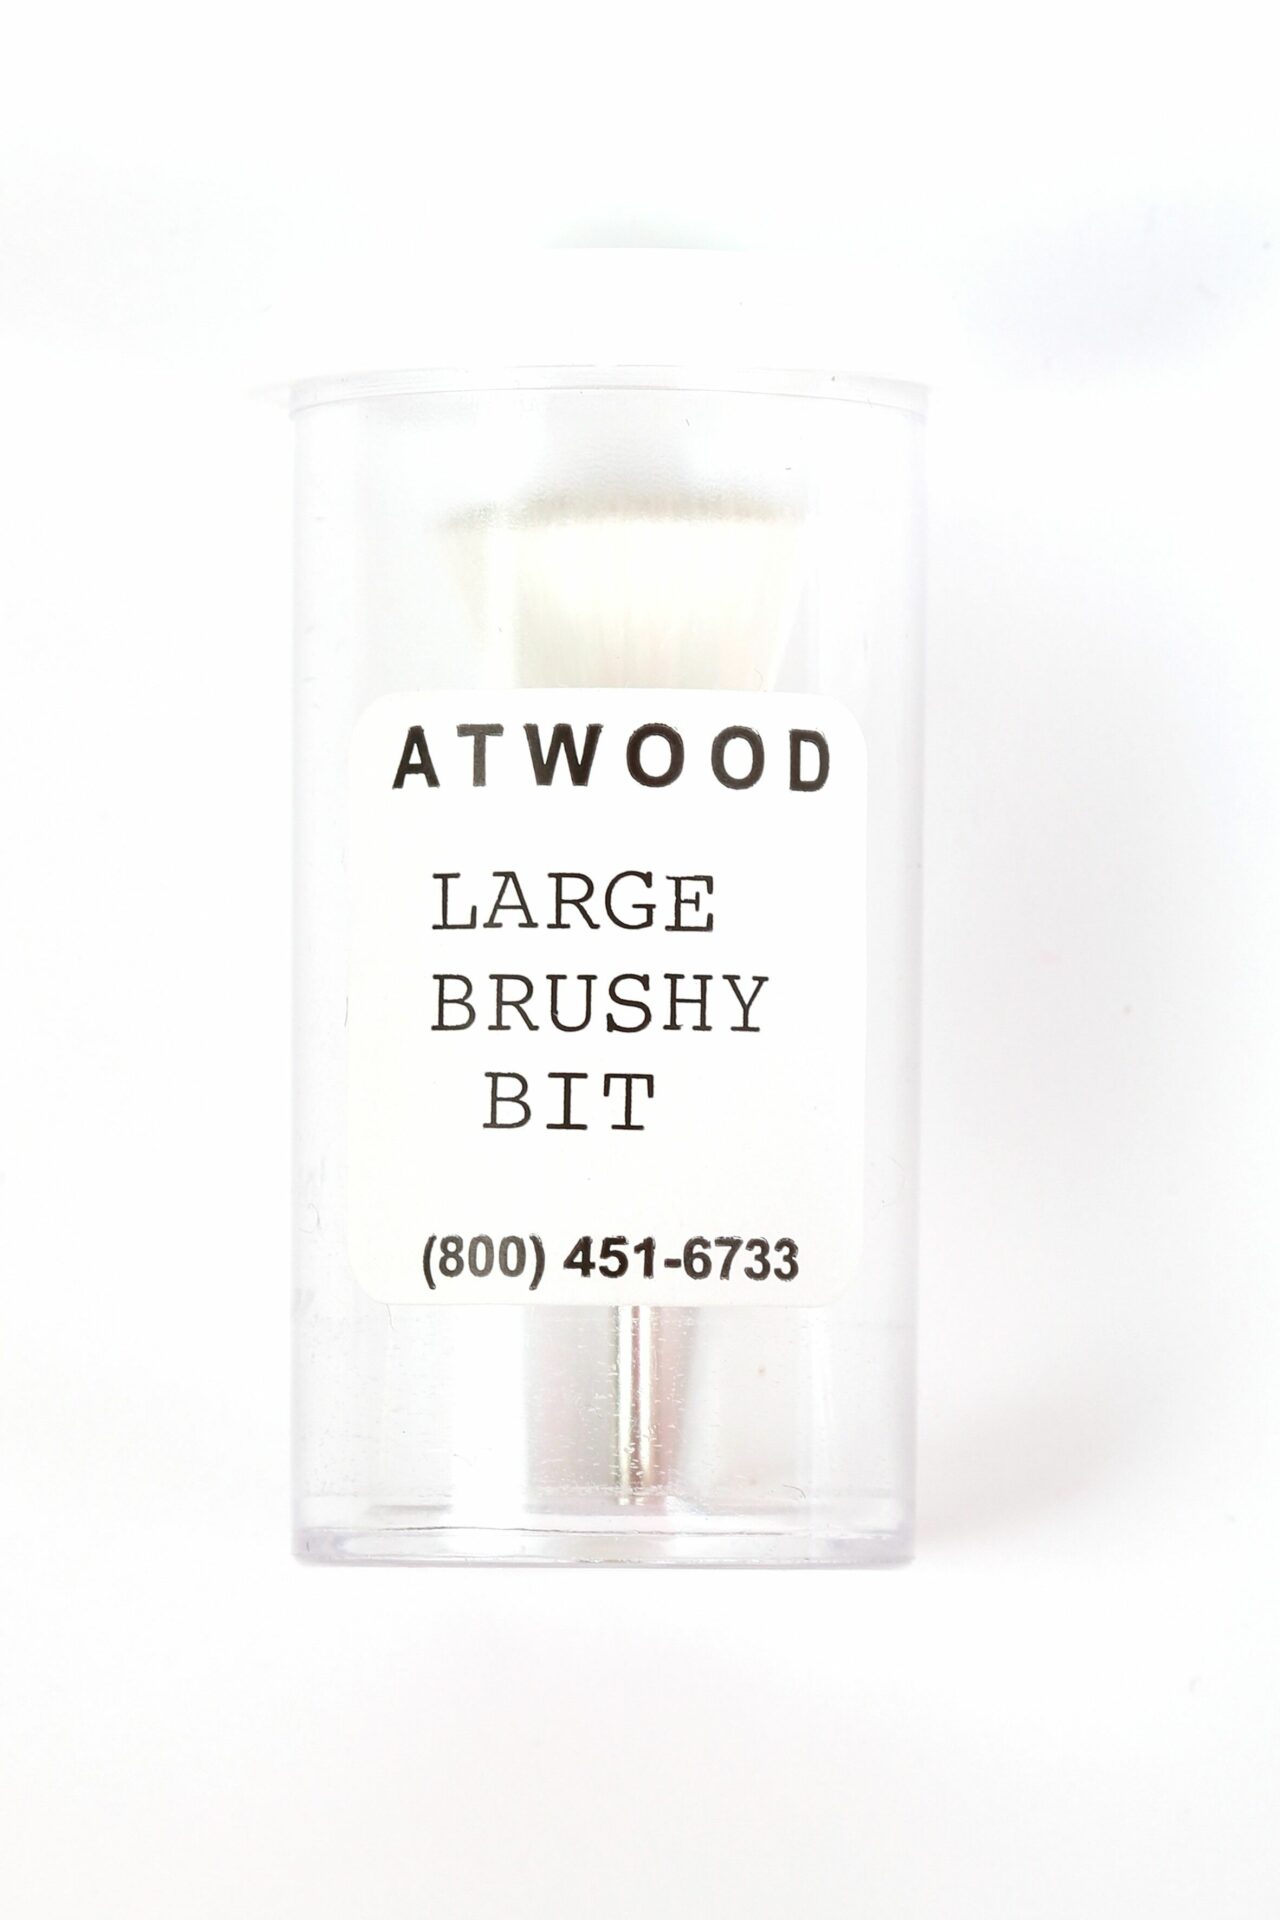 Freesbit Atwood Large Brushy Bit Box